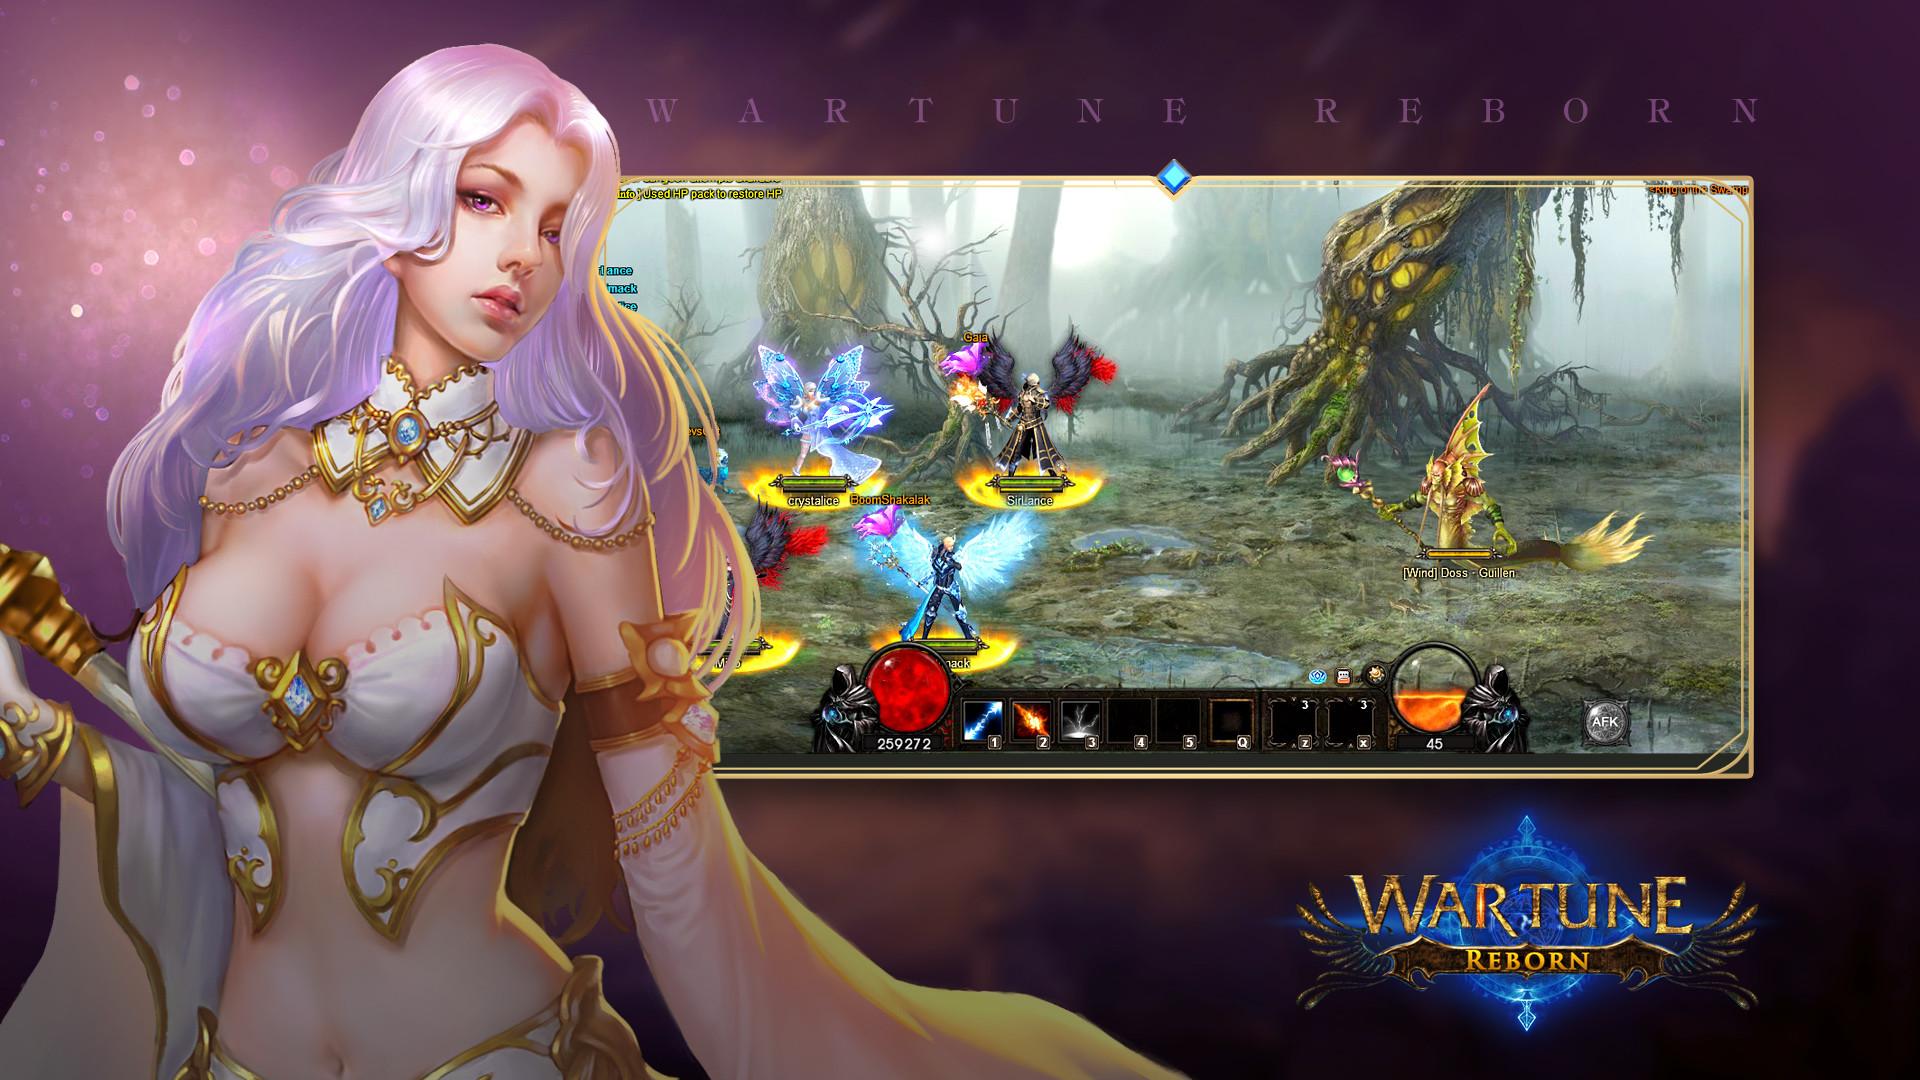 Screenshot №1 from game Wartune Reborn